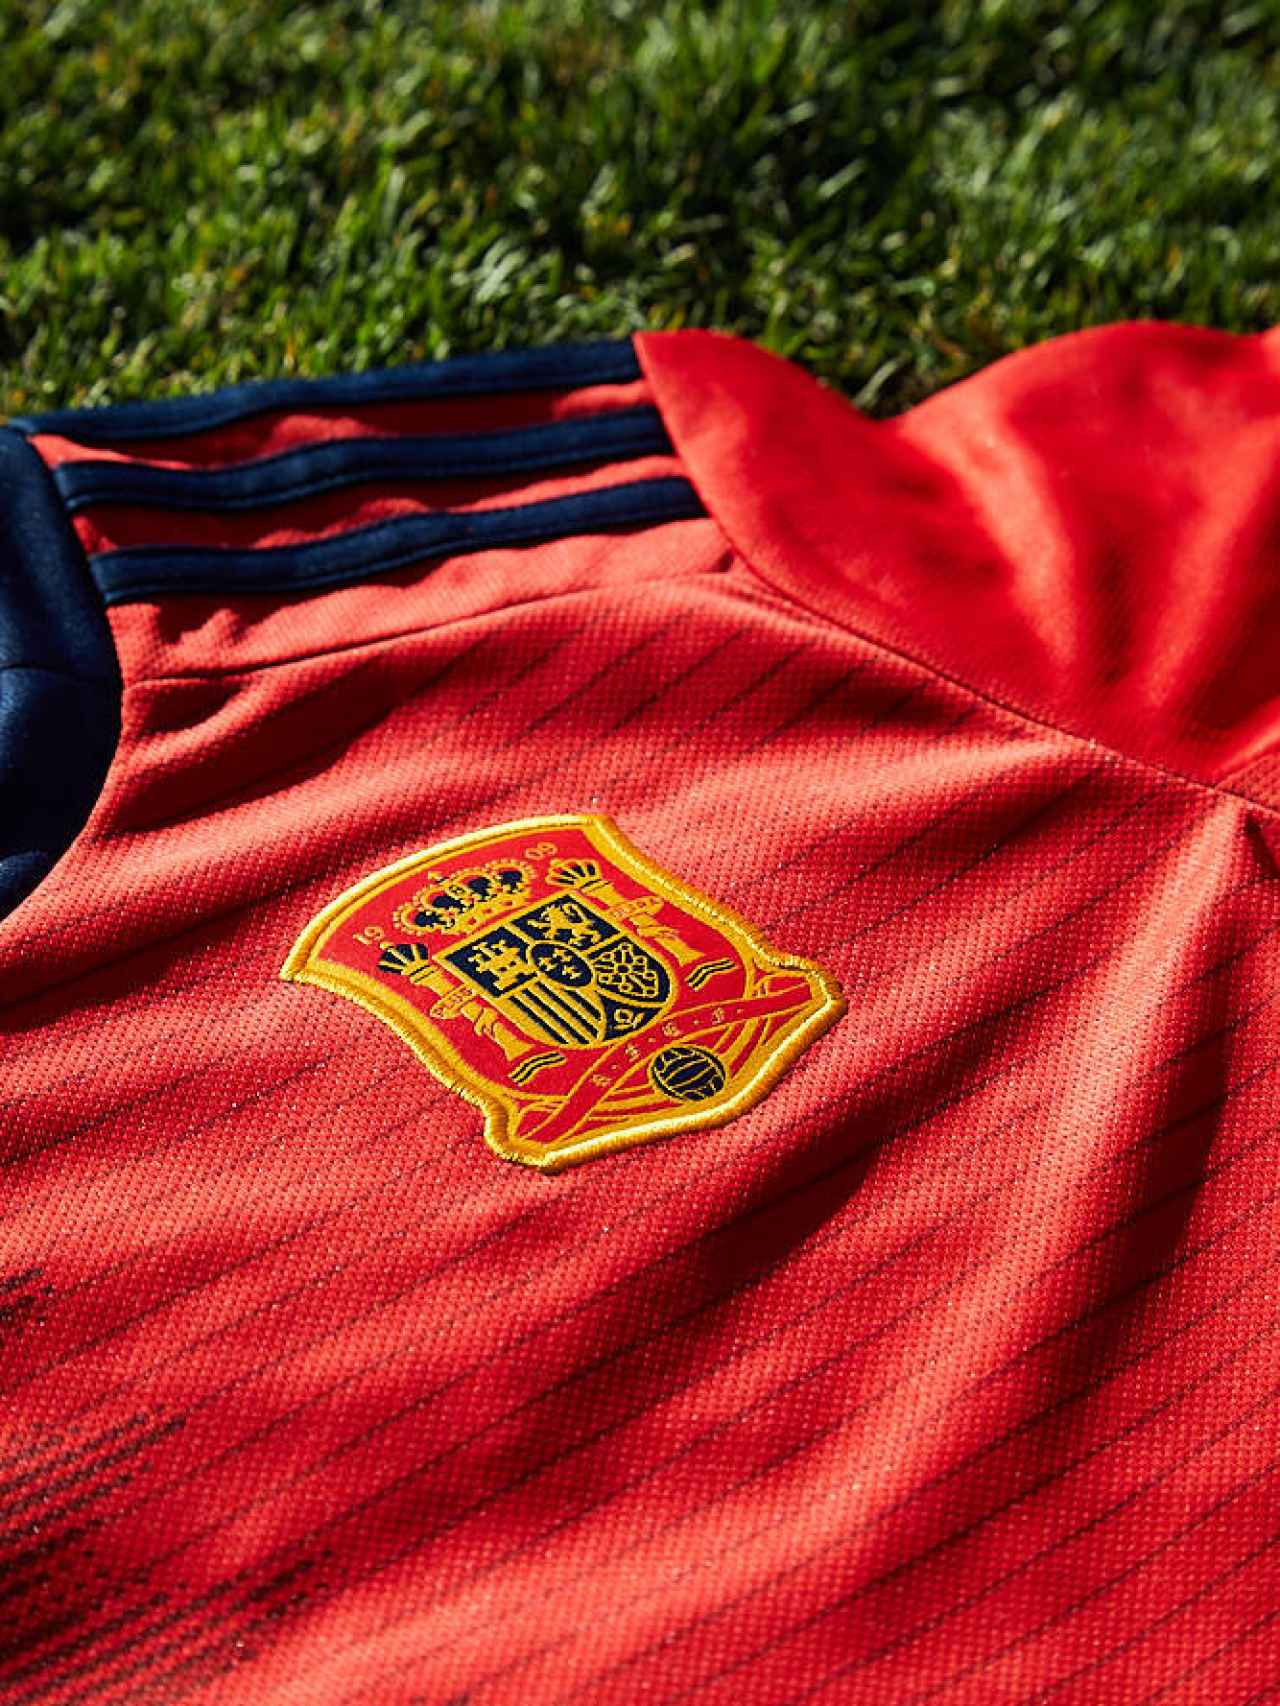 camiseta seleccion española femenina futbol